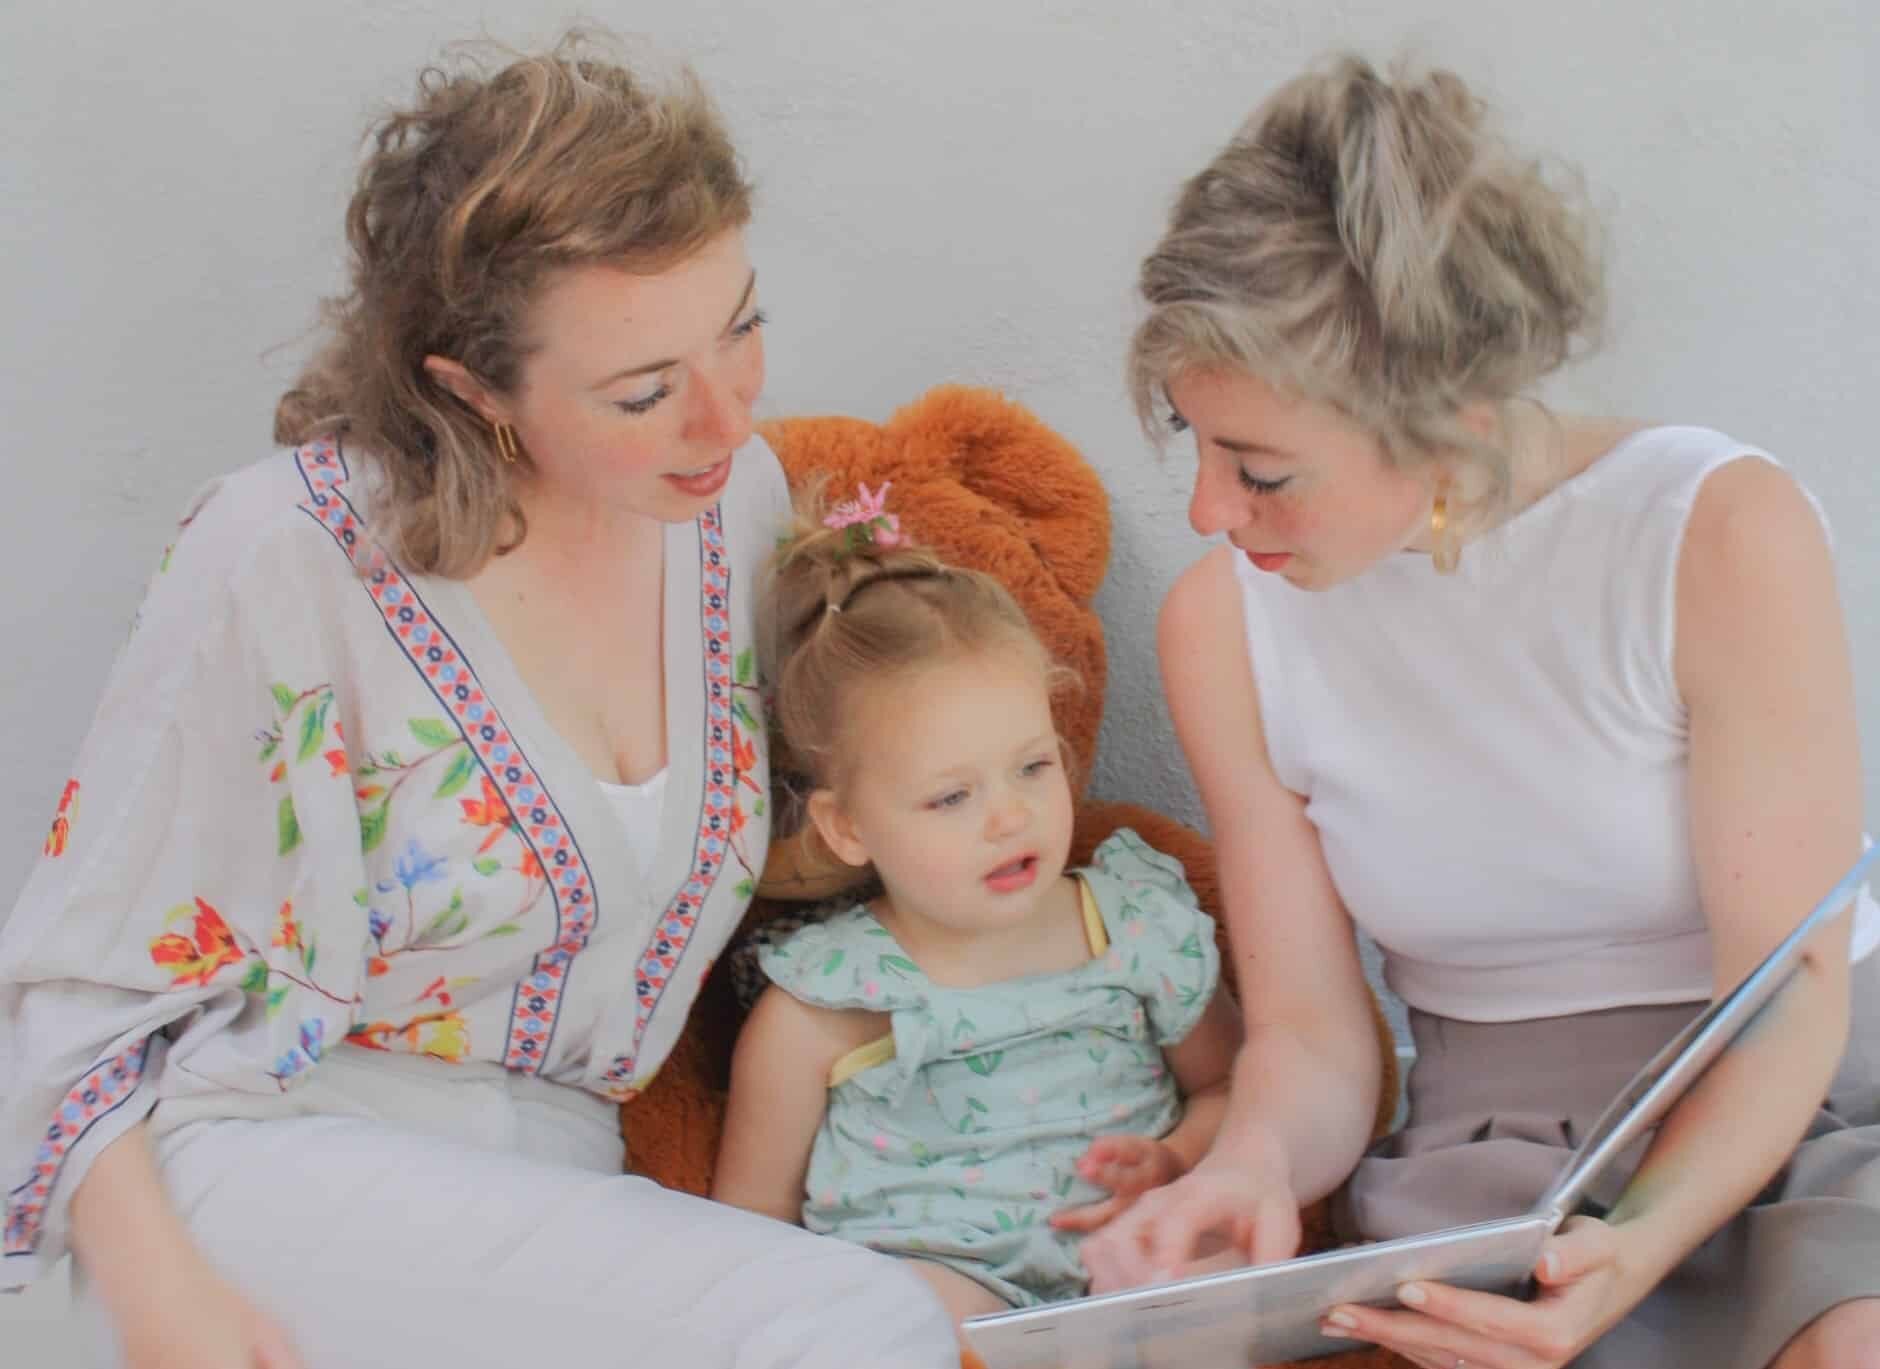 Nina.care founder Jasmijn en Lyla reading a story to a toddler